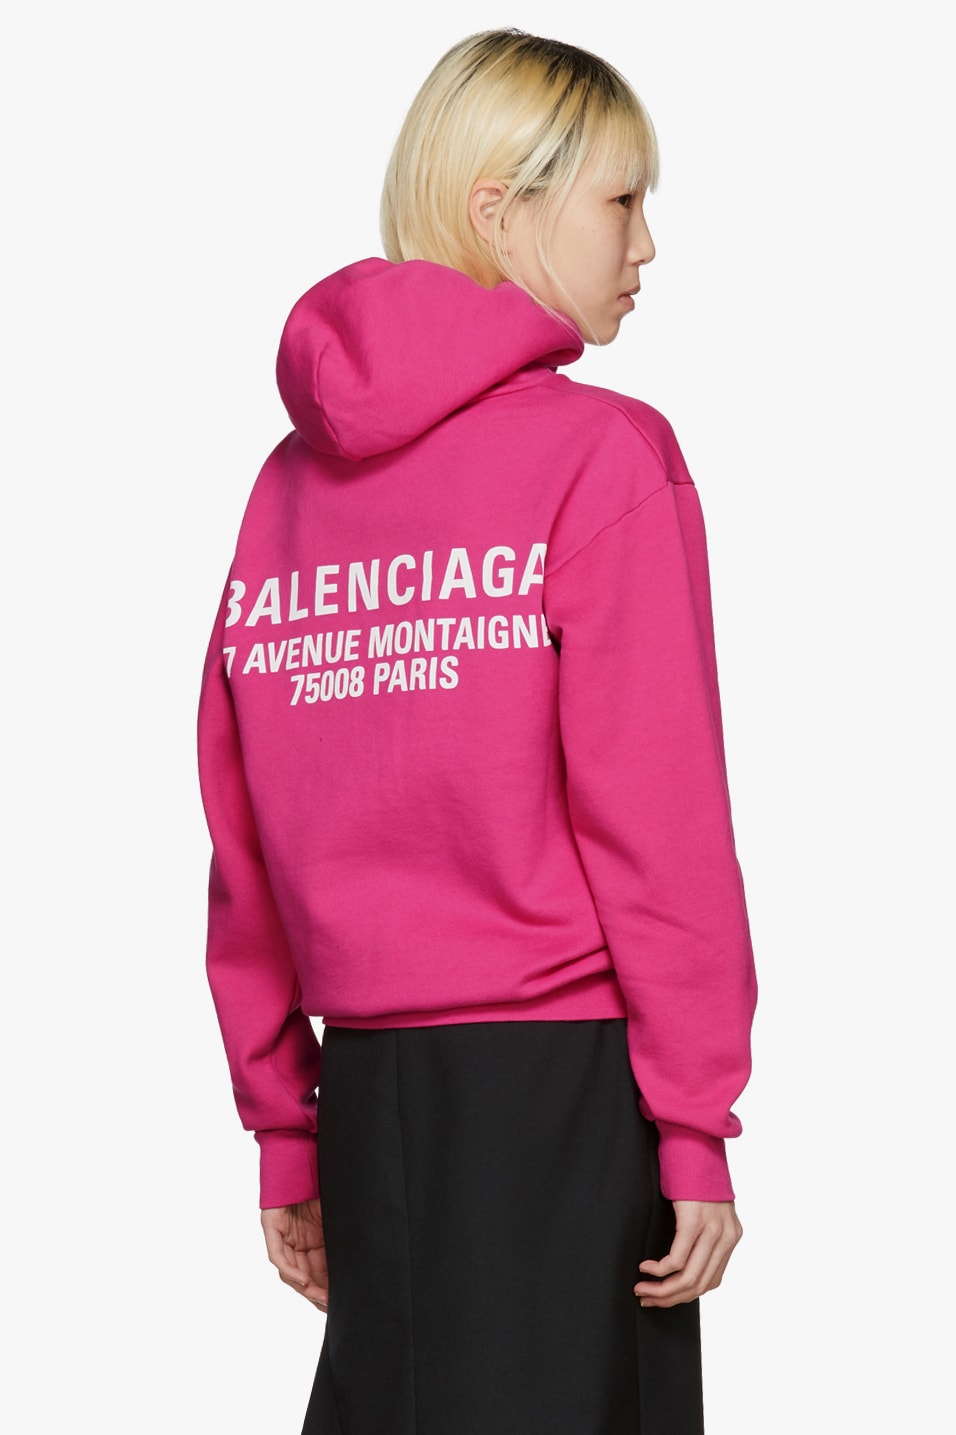 Balenciaga New Logo Hoodies Sweatshirts Casual Streetwear Pink Black Red